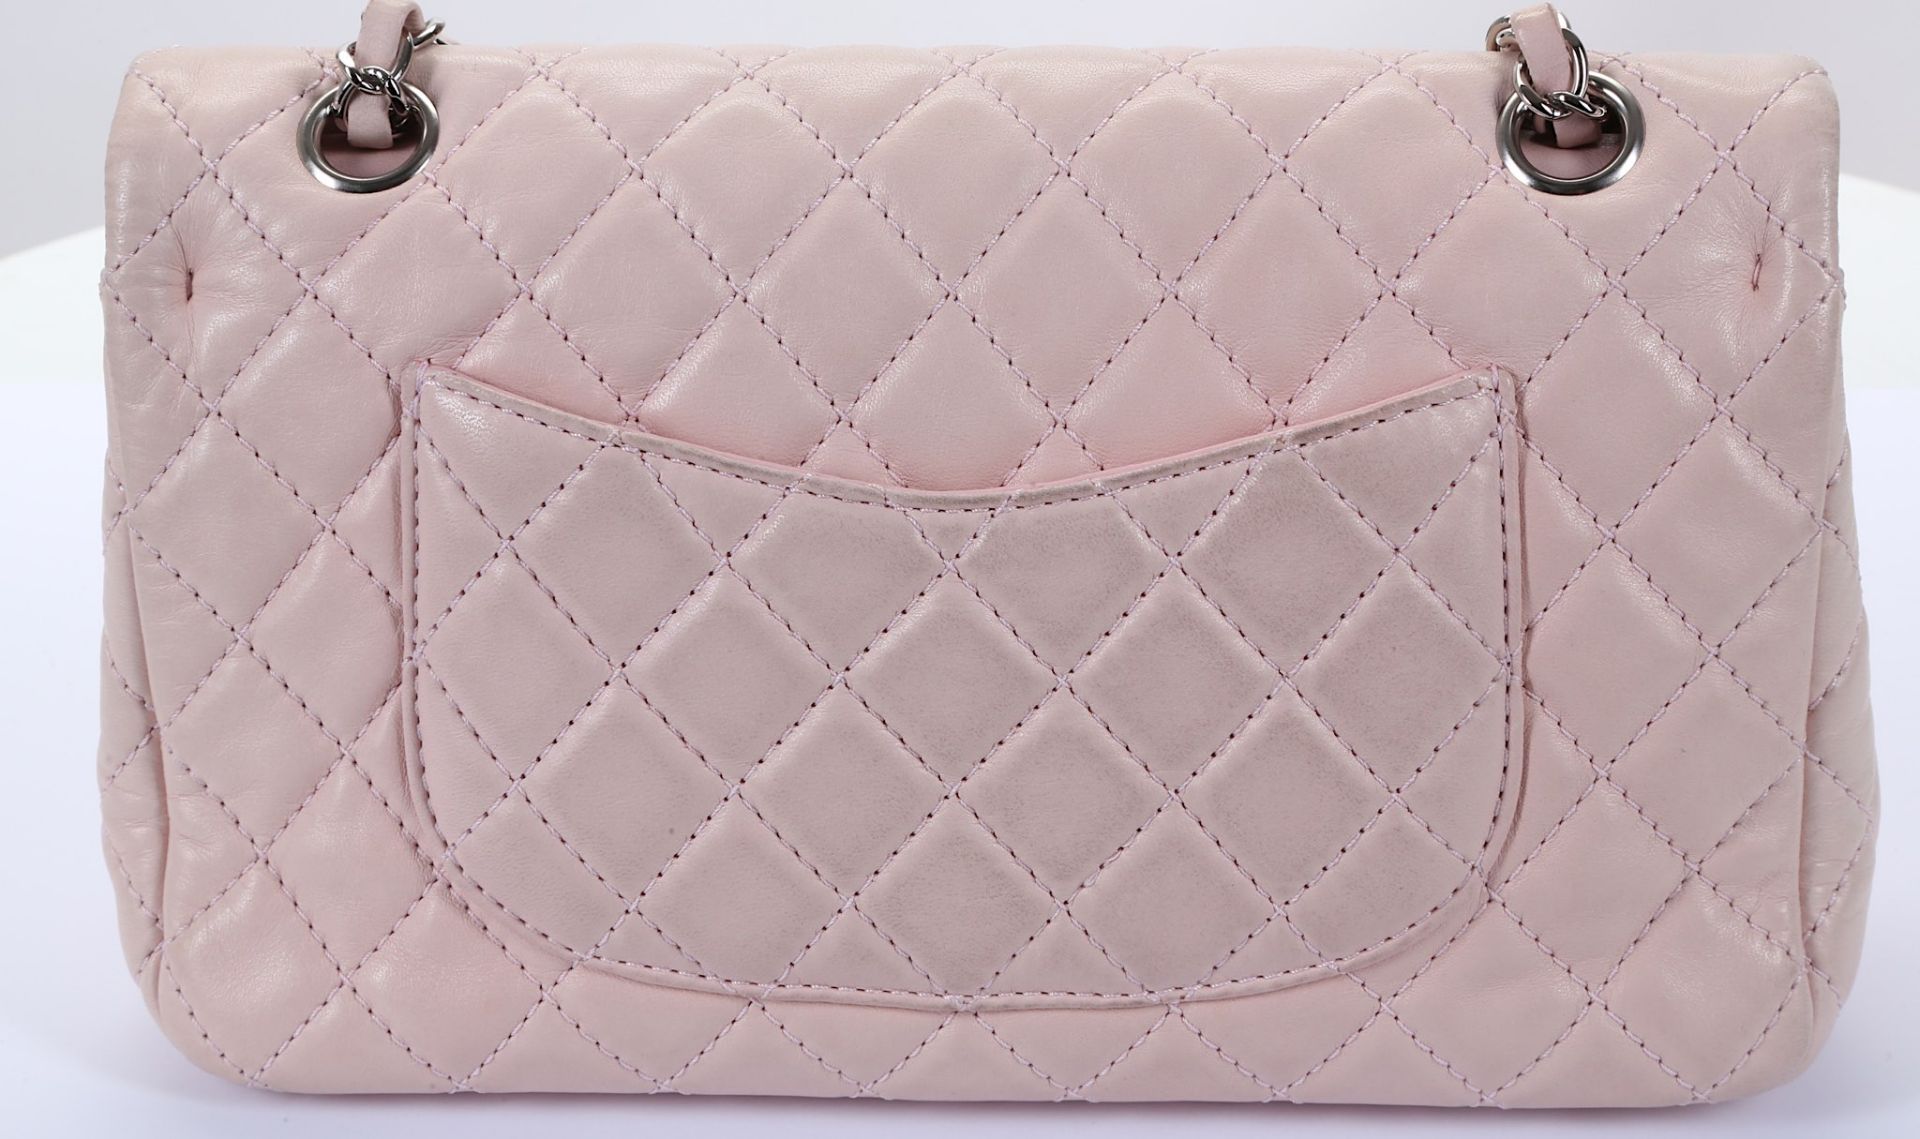 Chanel Light Pink Classic 2.55 Medium Bag, c. 2008 - Image 2 of 6